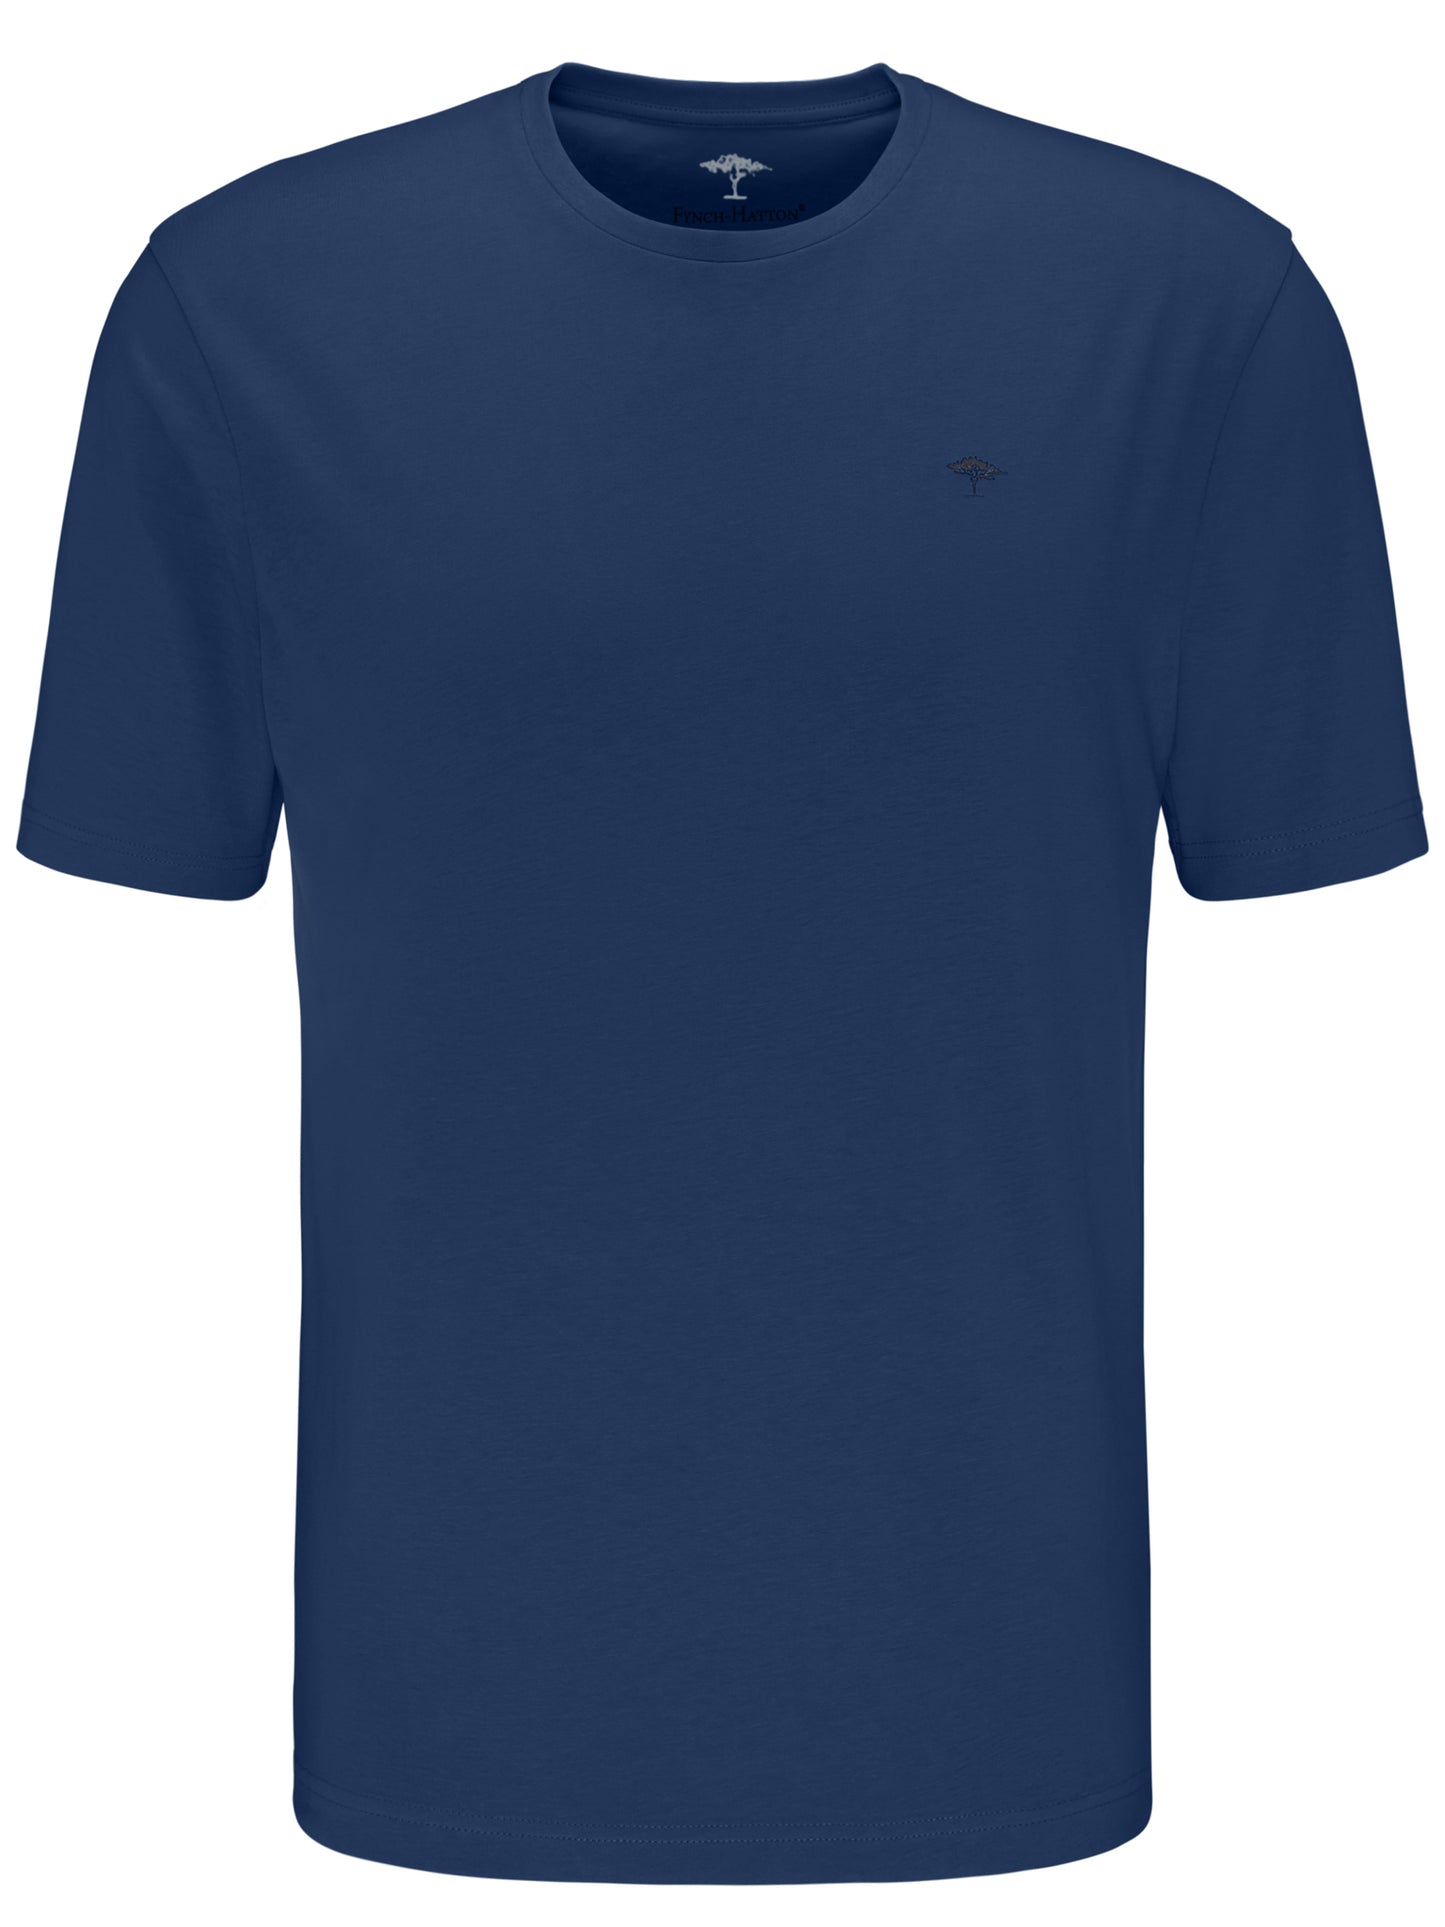 Fynch Hatton T-Shirt, O-Neck in regular Classic fit.    Chosen in  Midnight